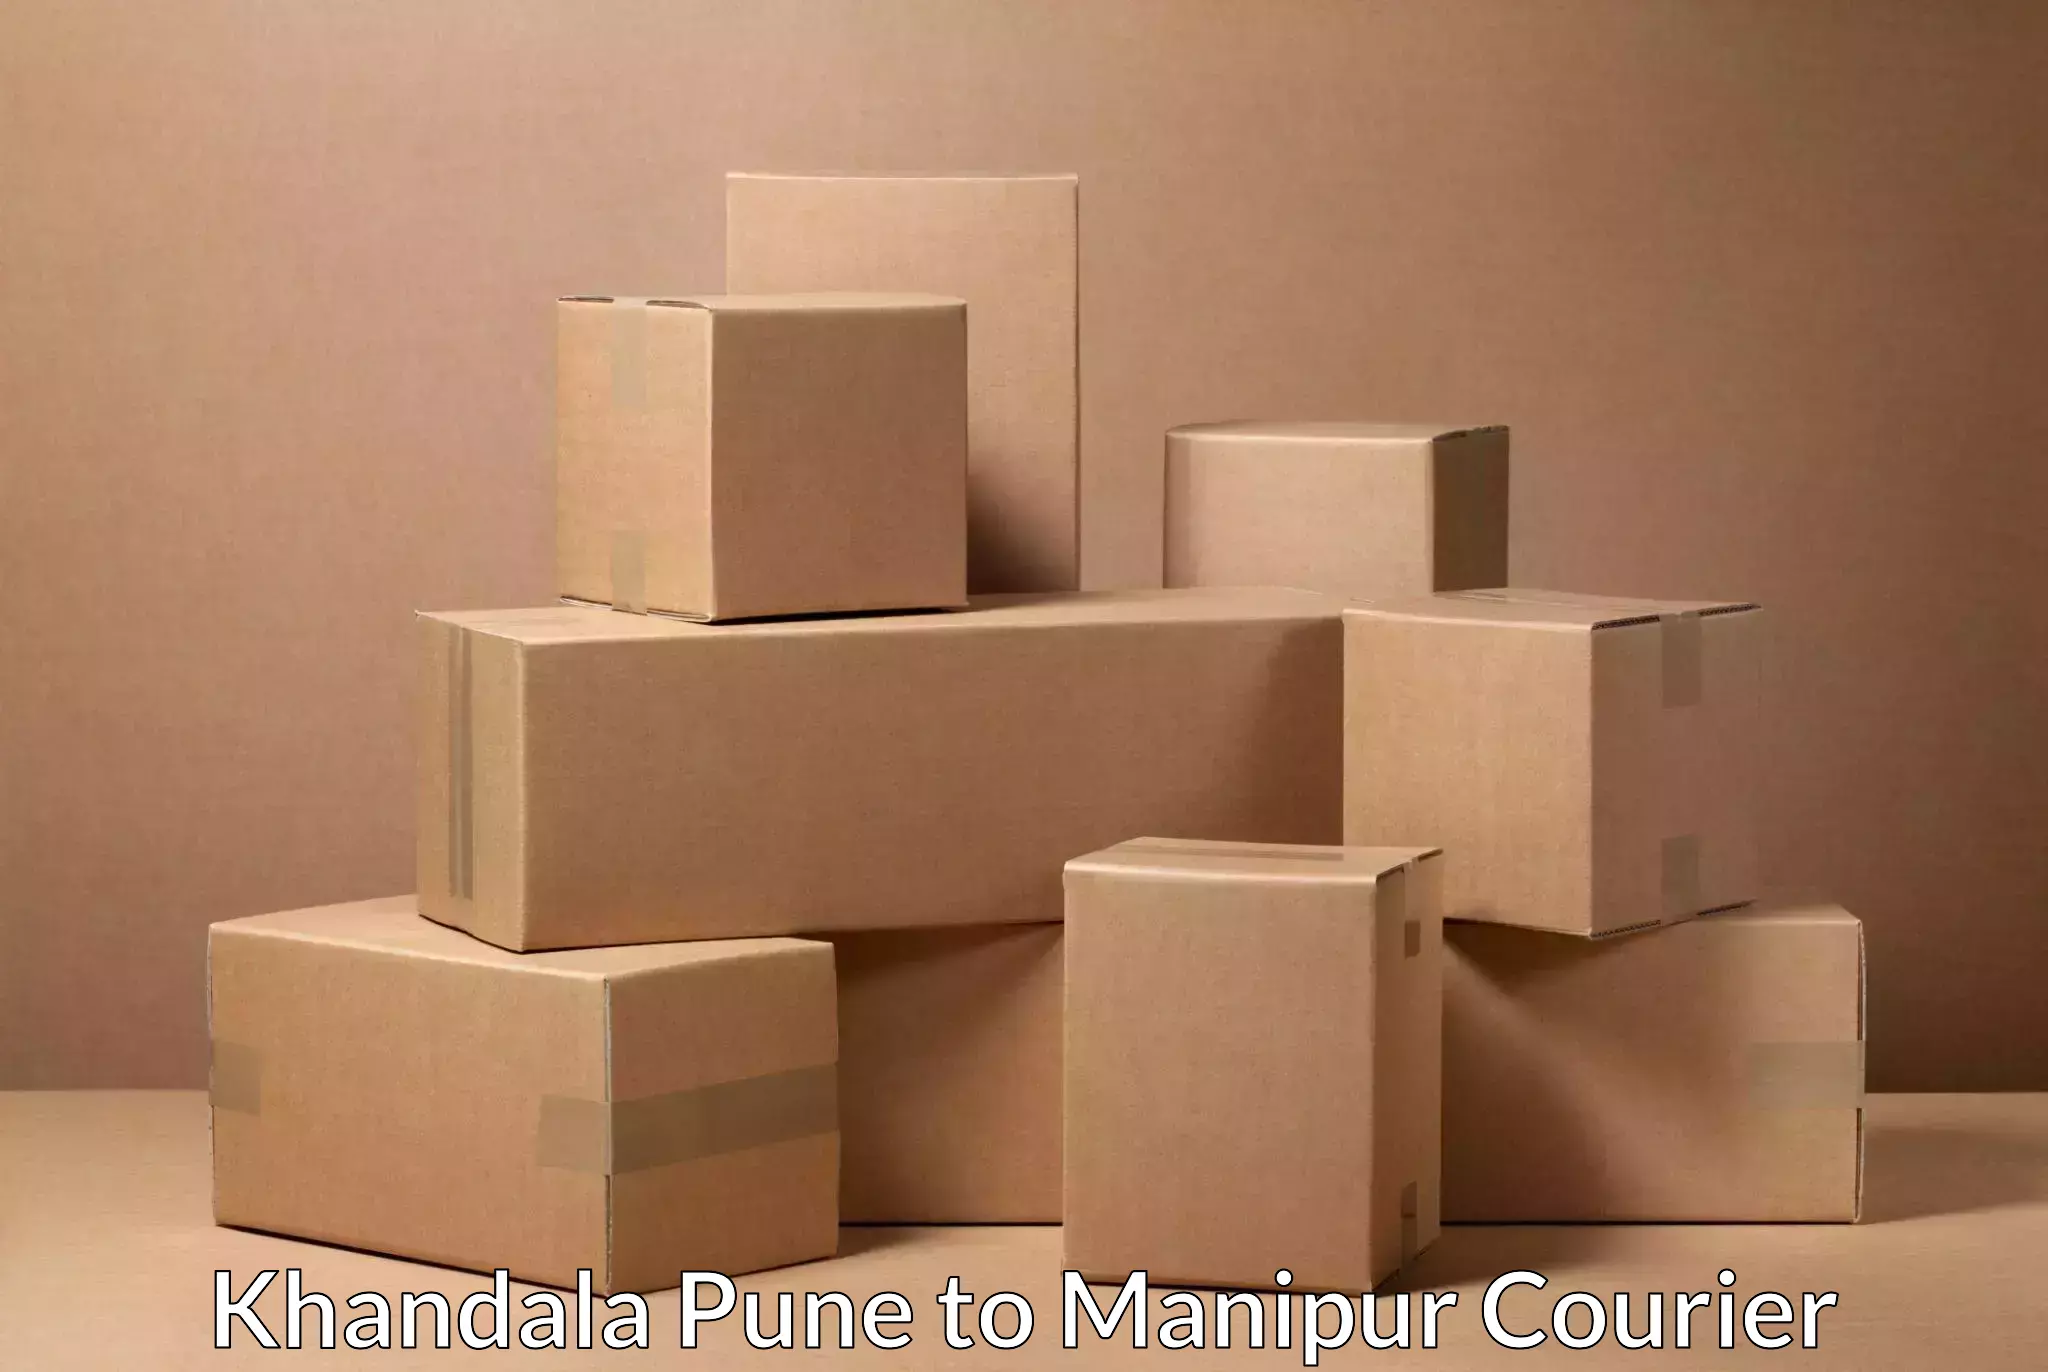 Enhanced tracking features Khandala Pune to Manipur